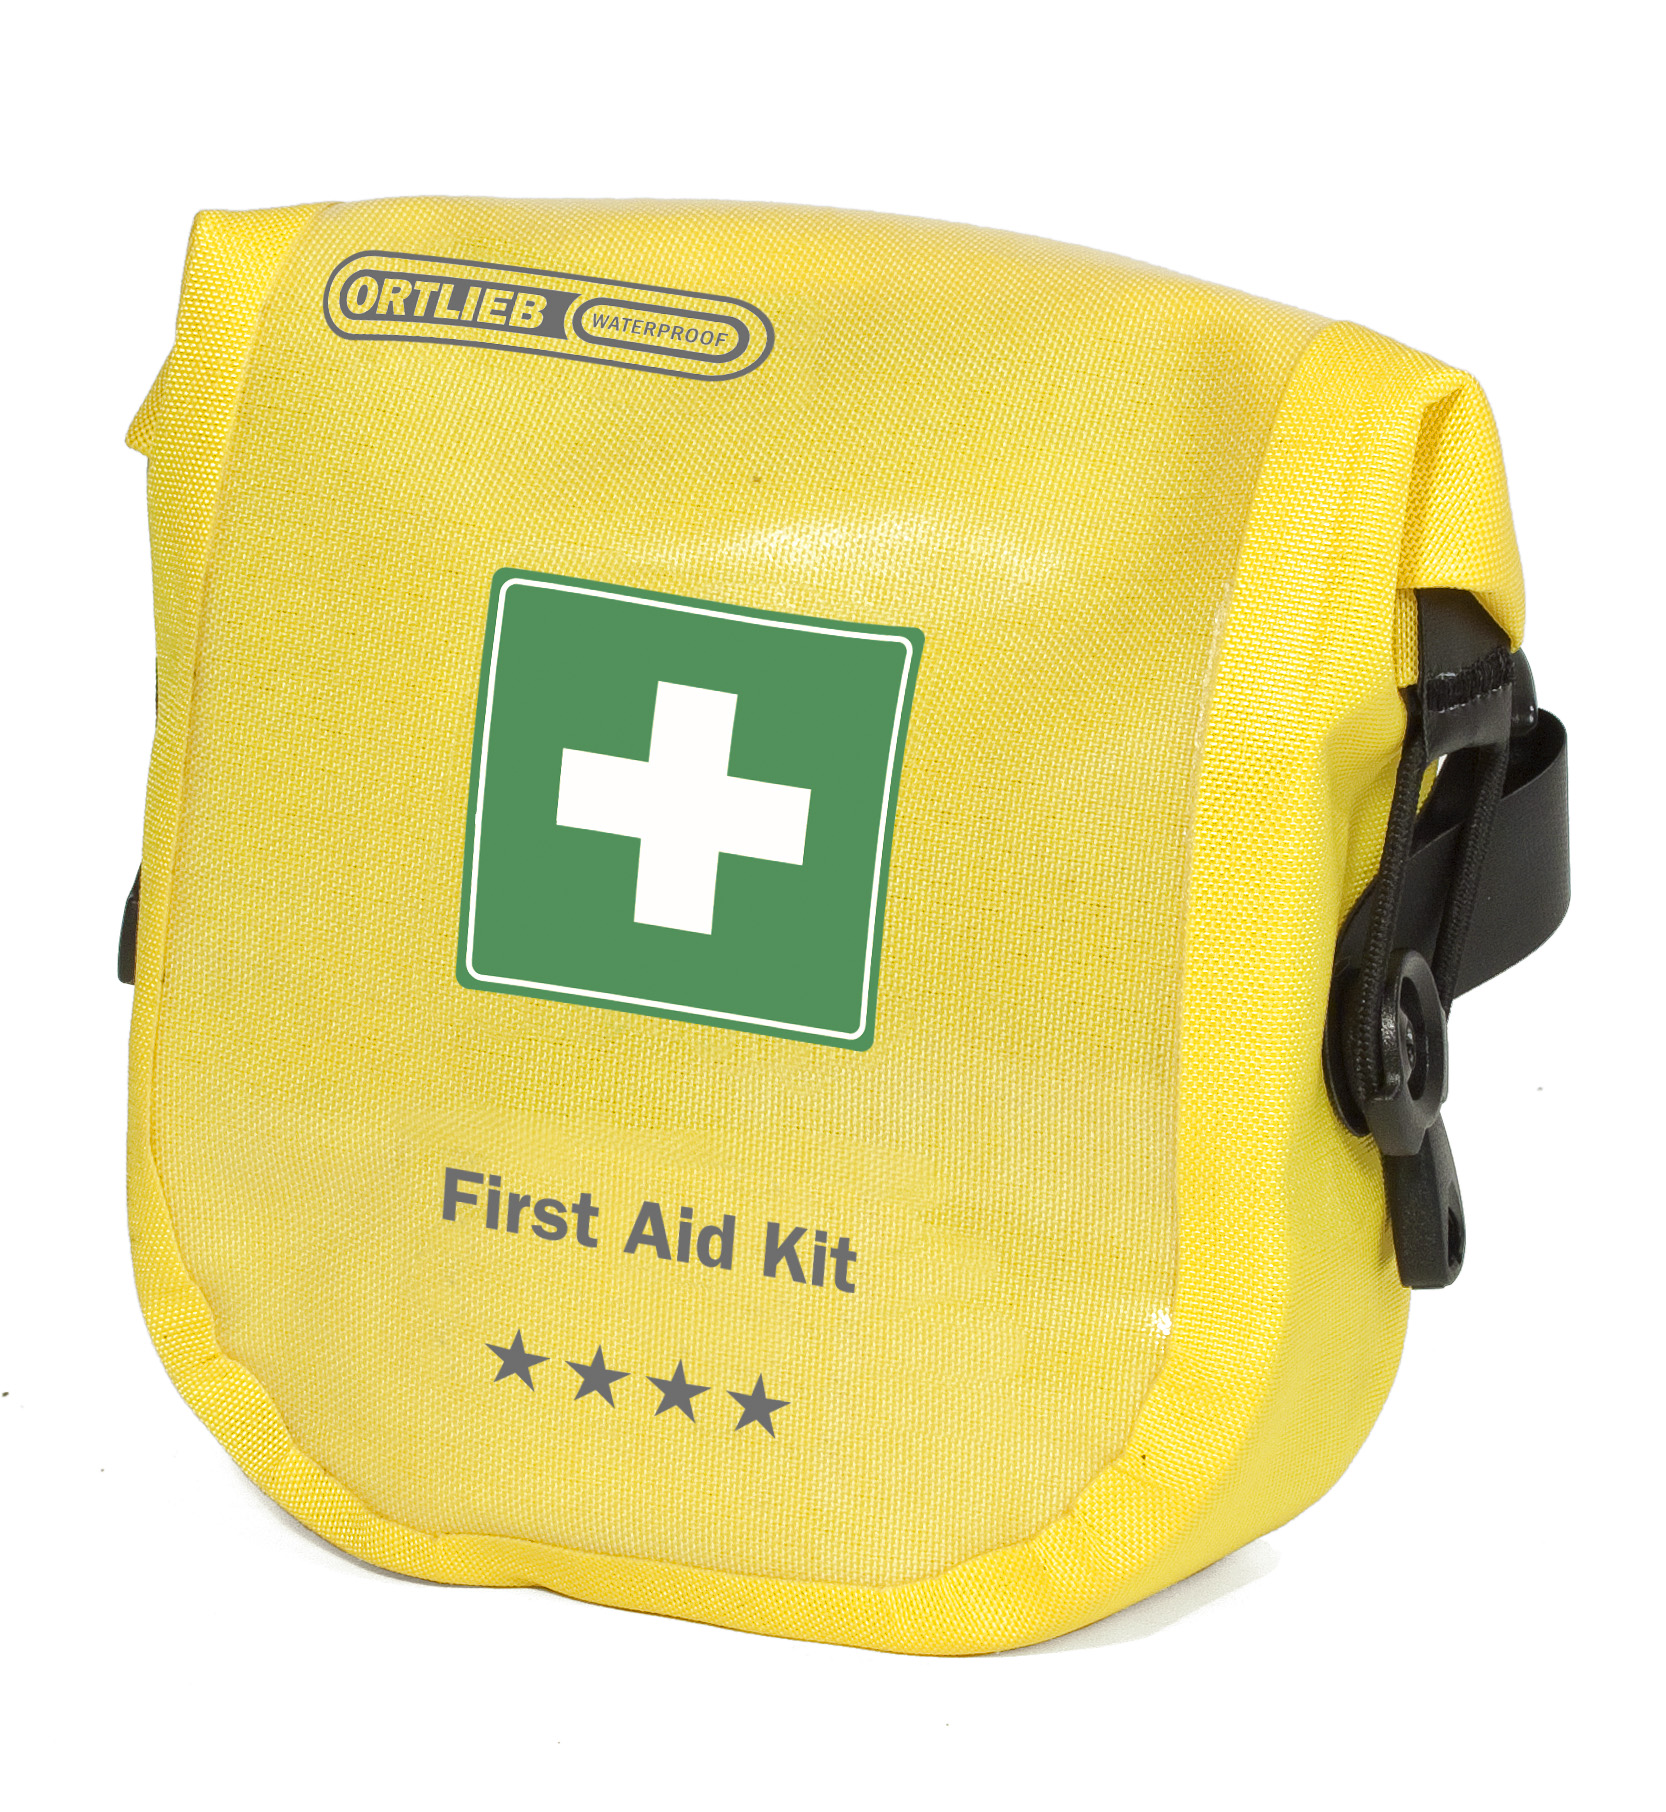 First-Aid-Kit Safety regular